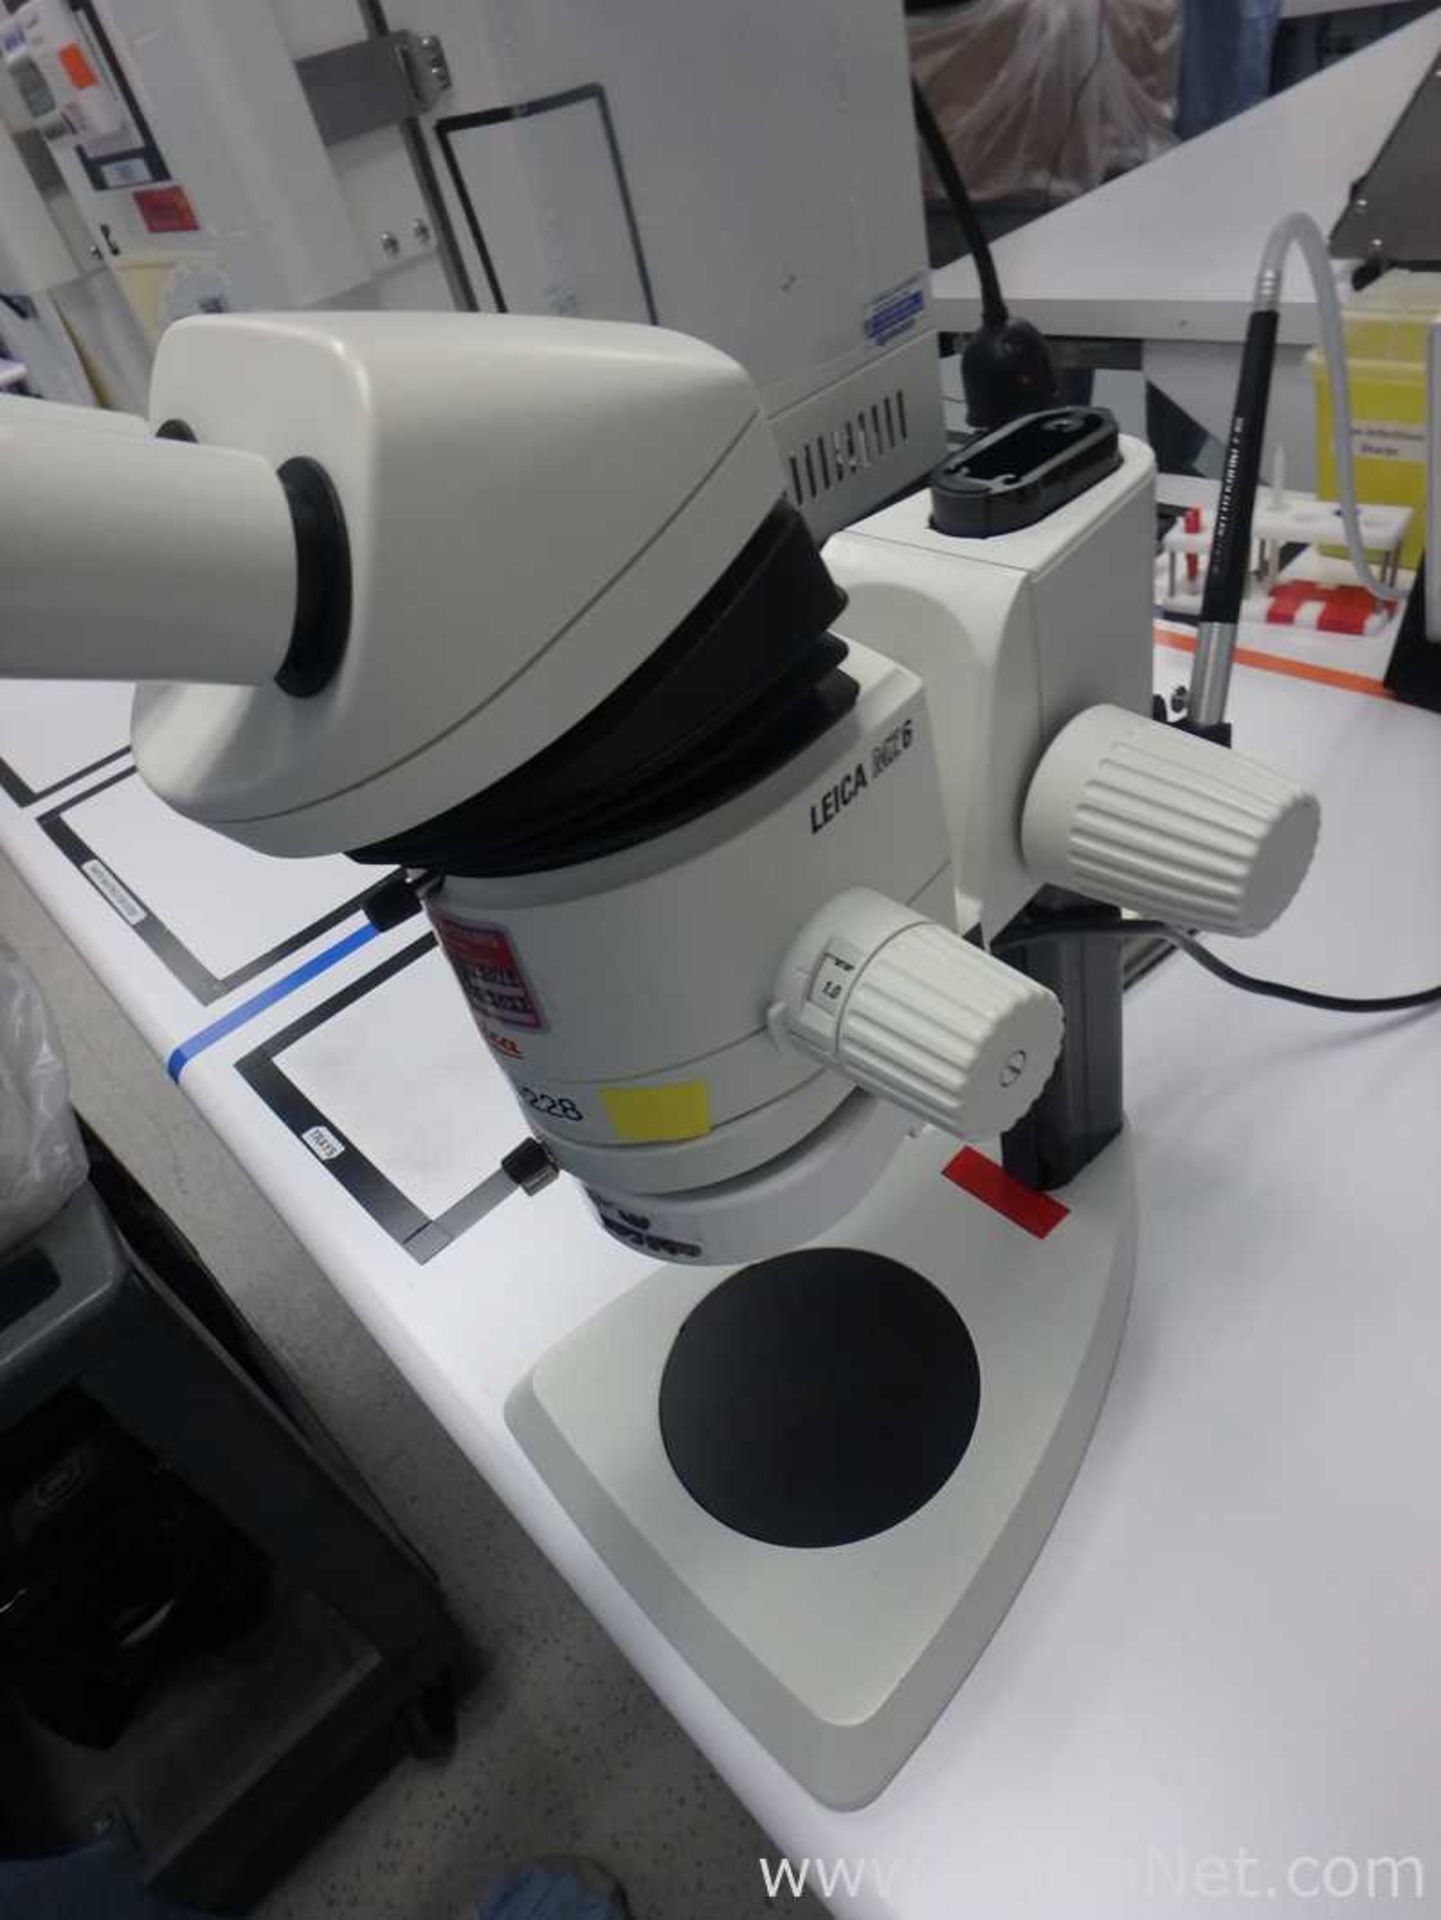 Leica MZ6 Microscope - Image 4 of 4